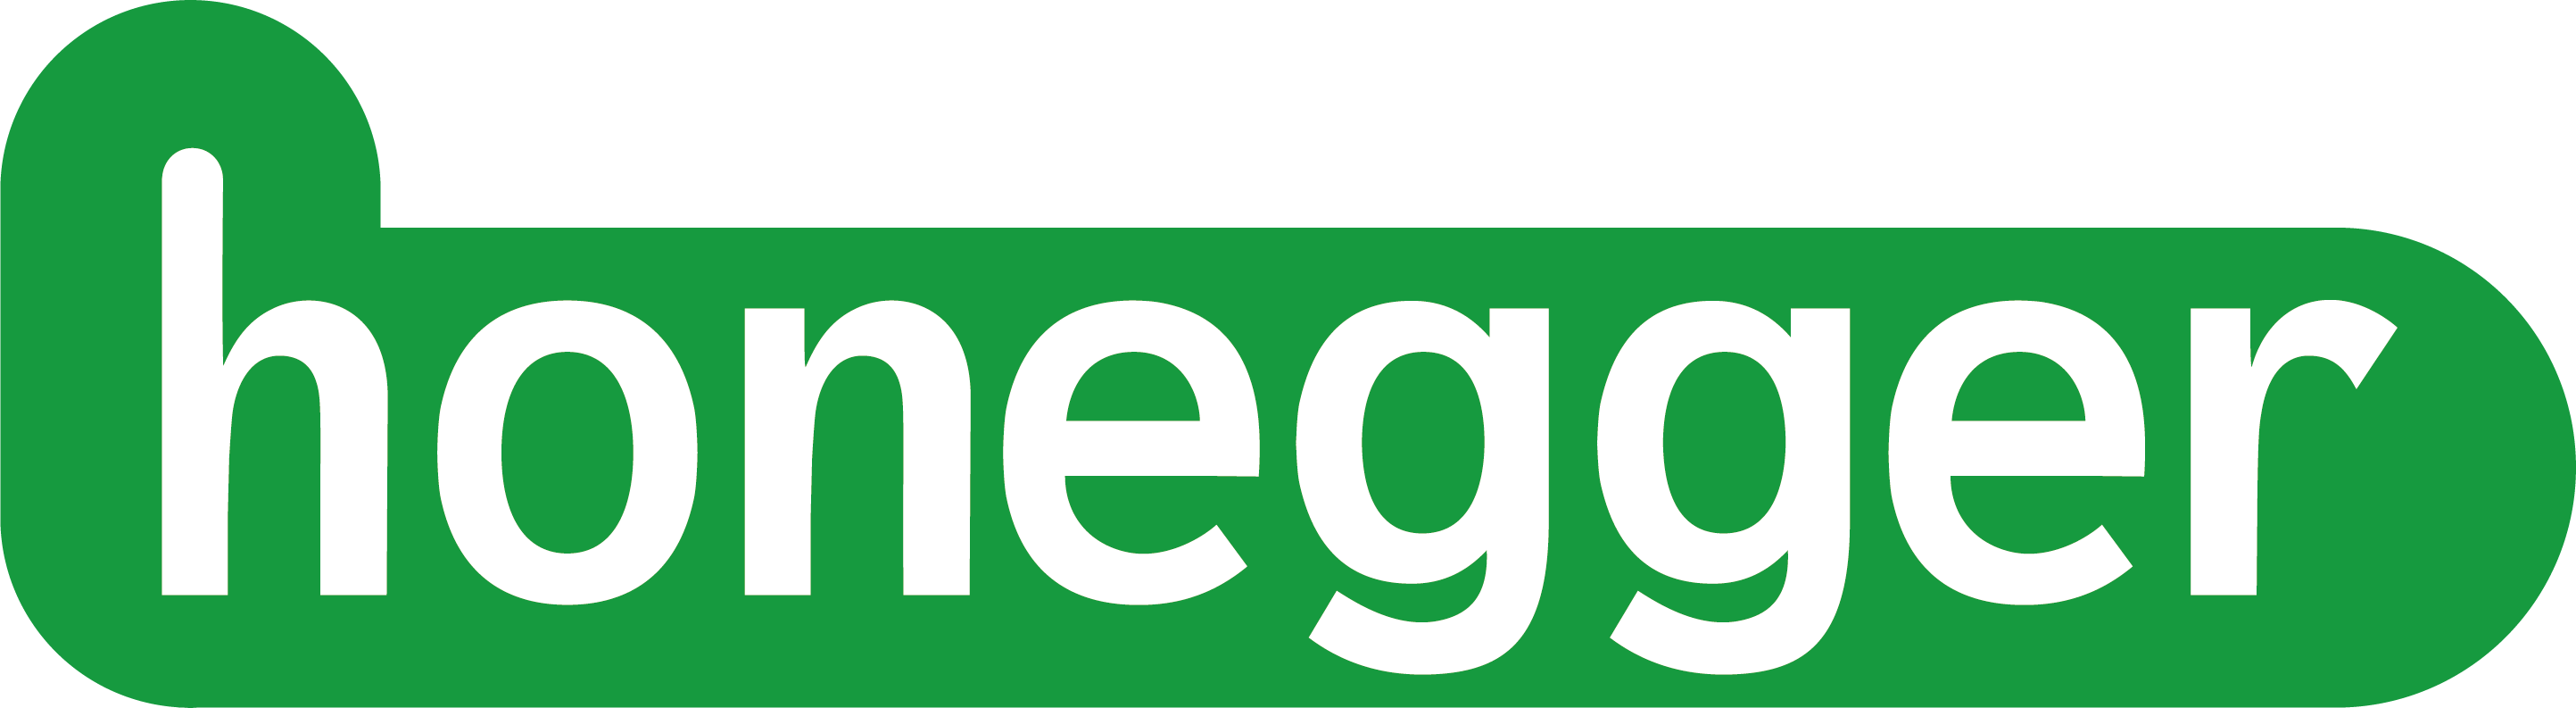 Honegger_Logo_RGB